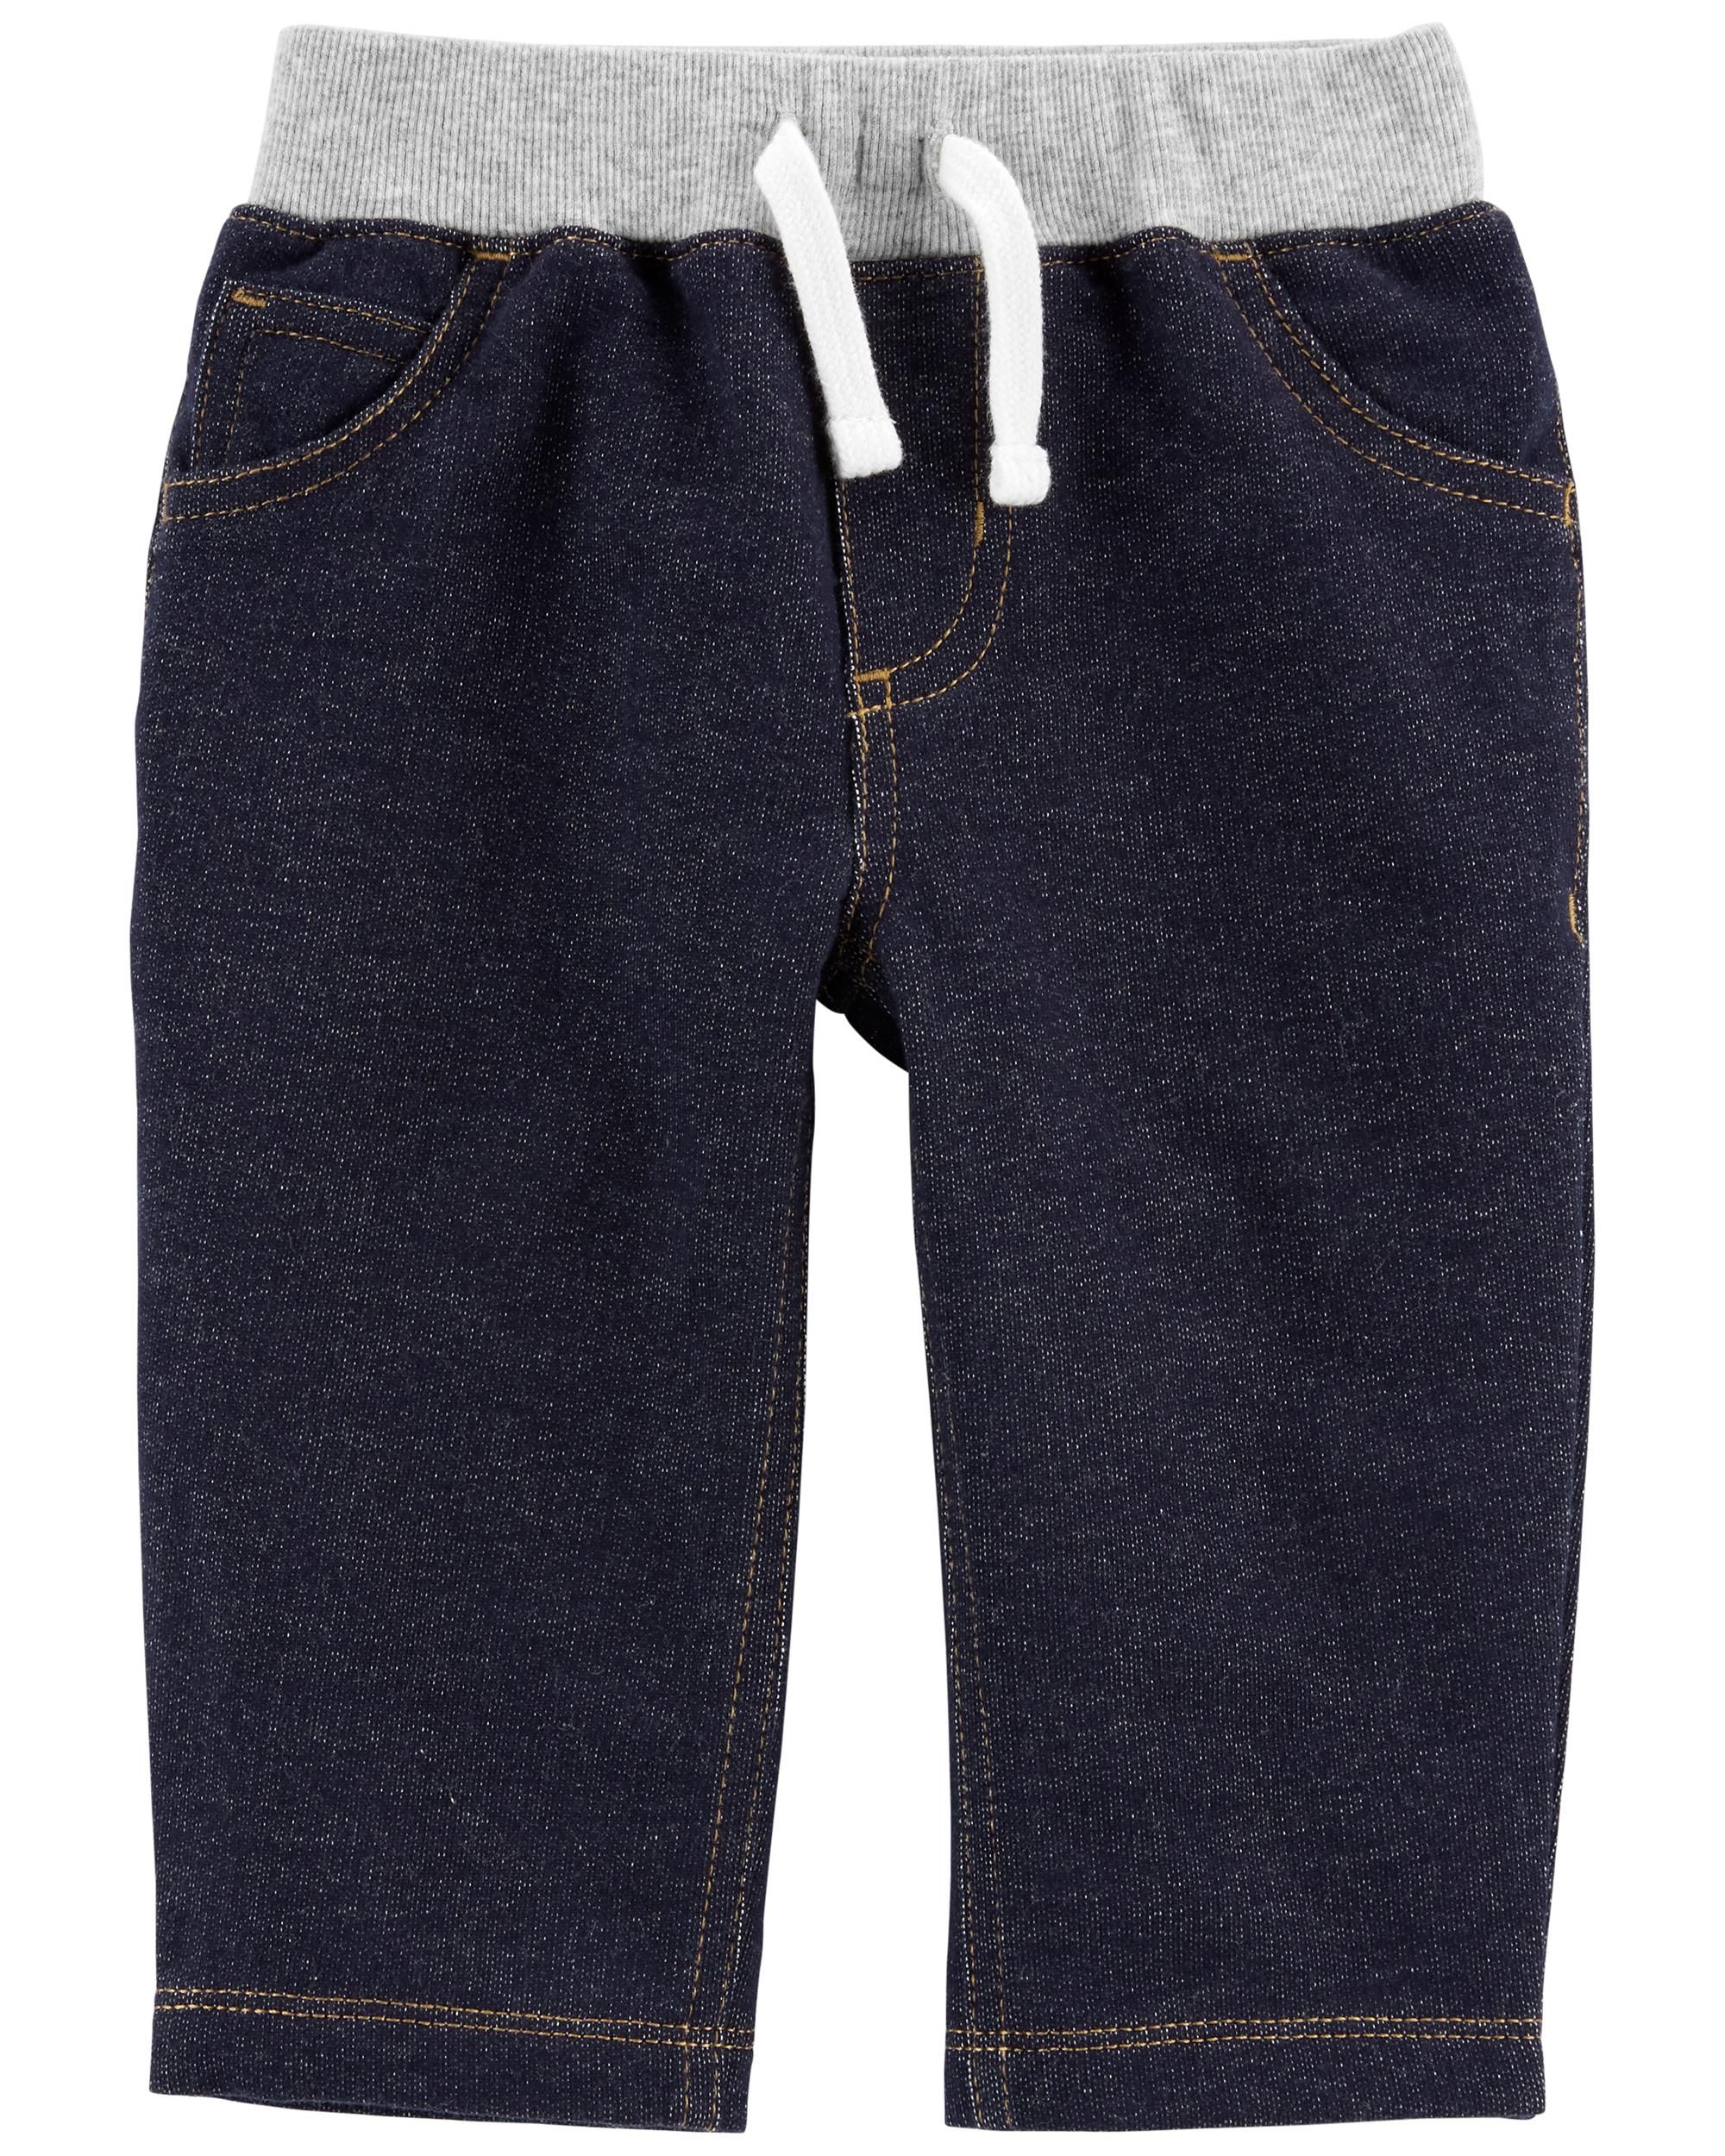 Pull-On Knit Denim Pants | Carter's